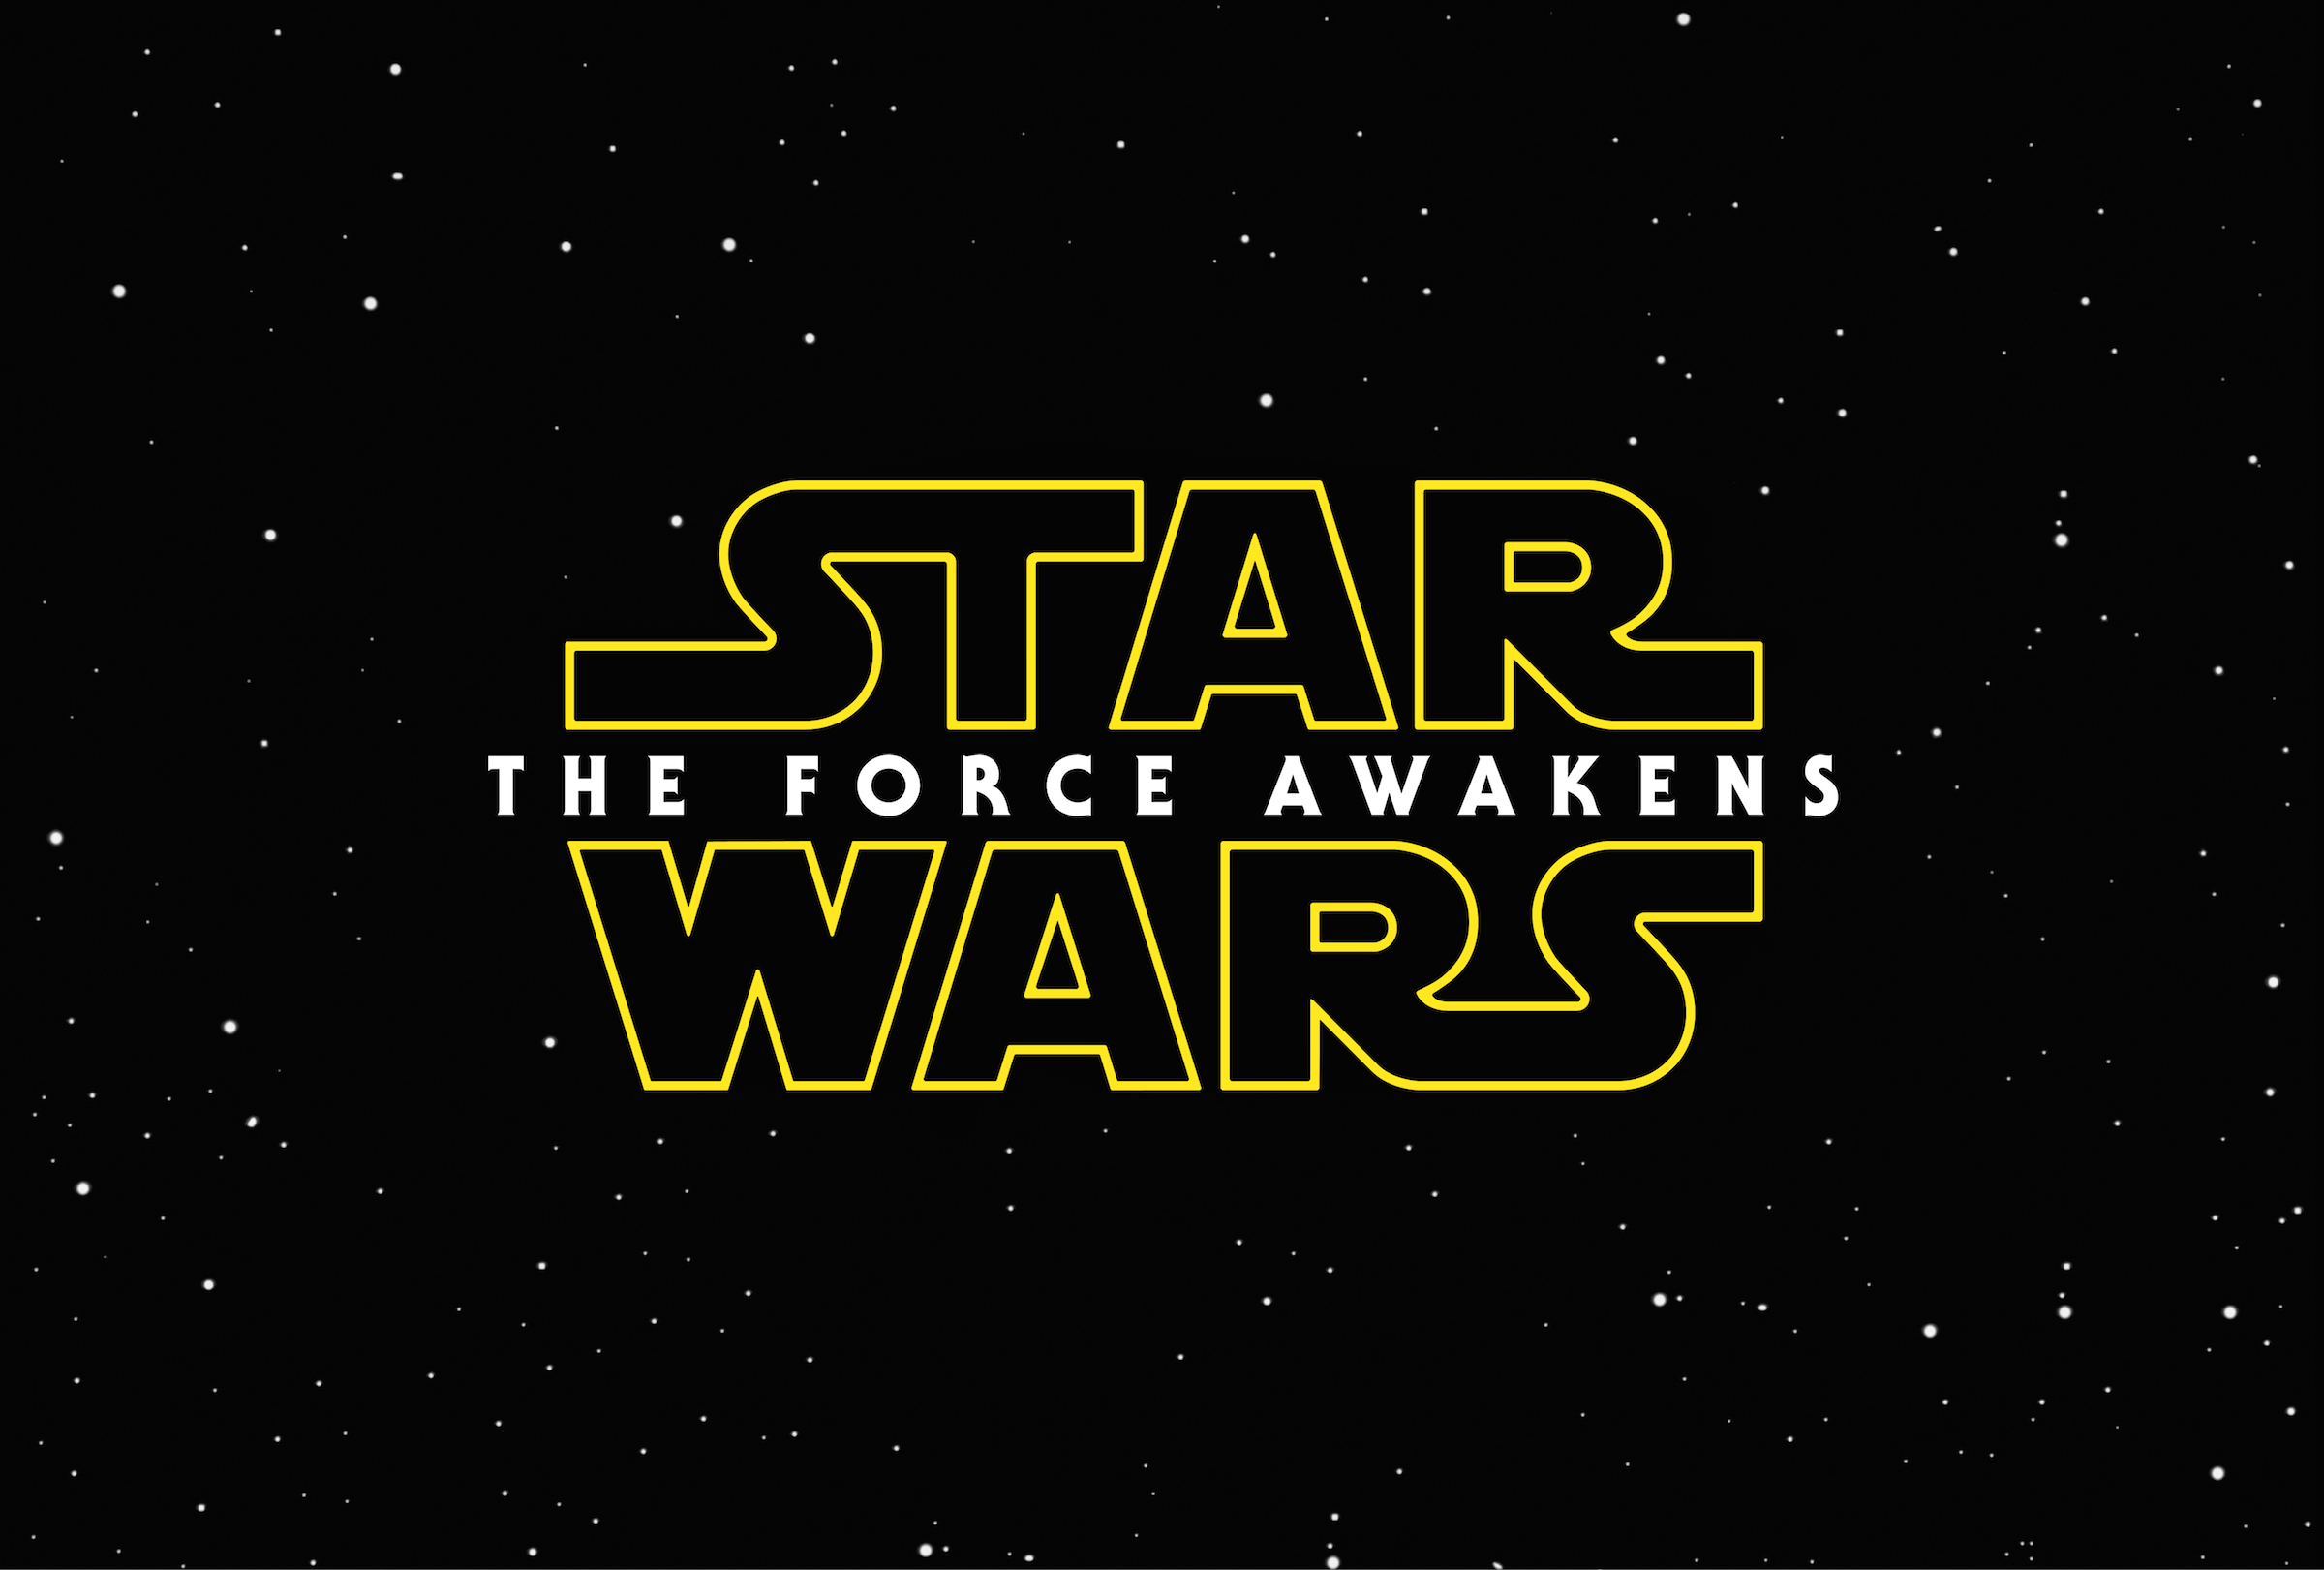 Star Wars The Force Awakens Trailer 2